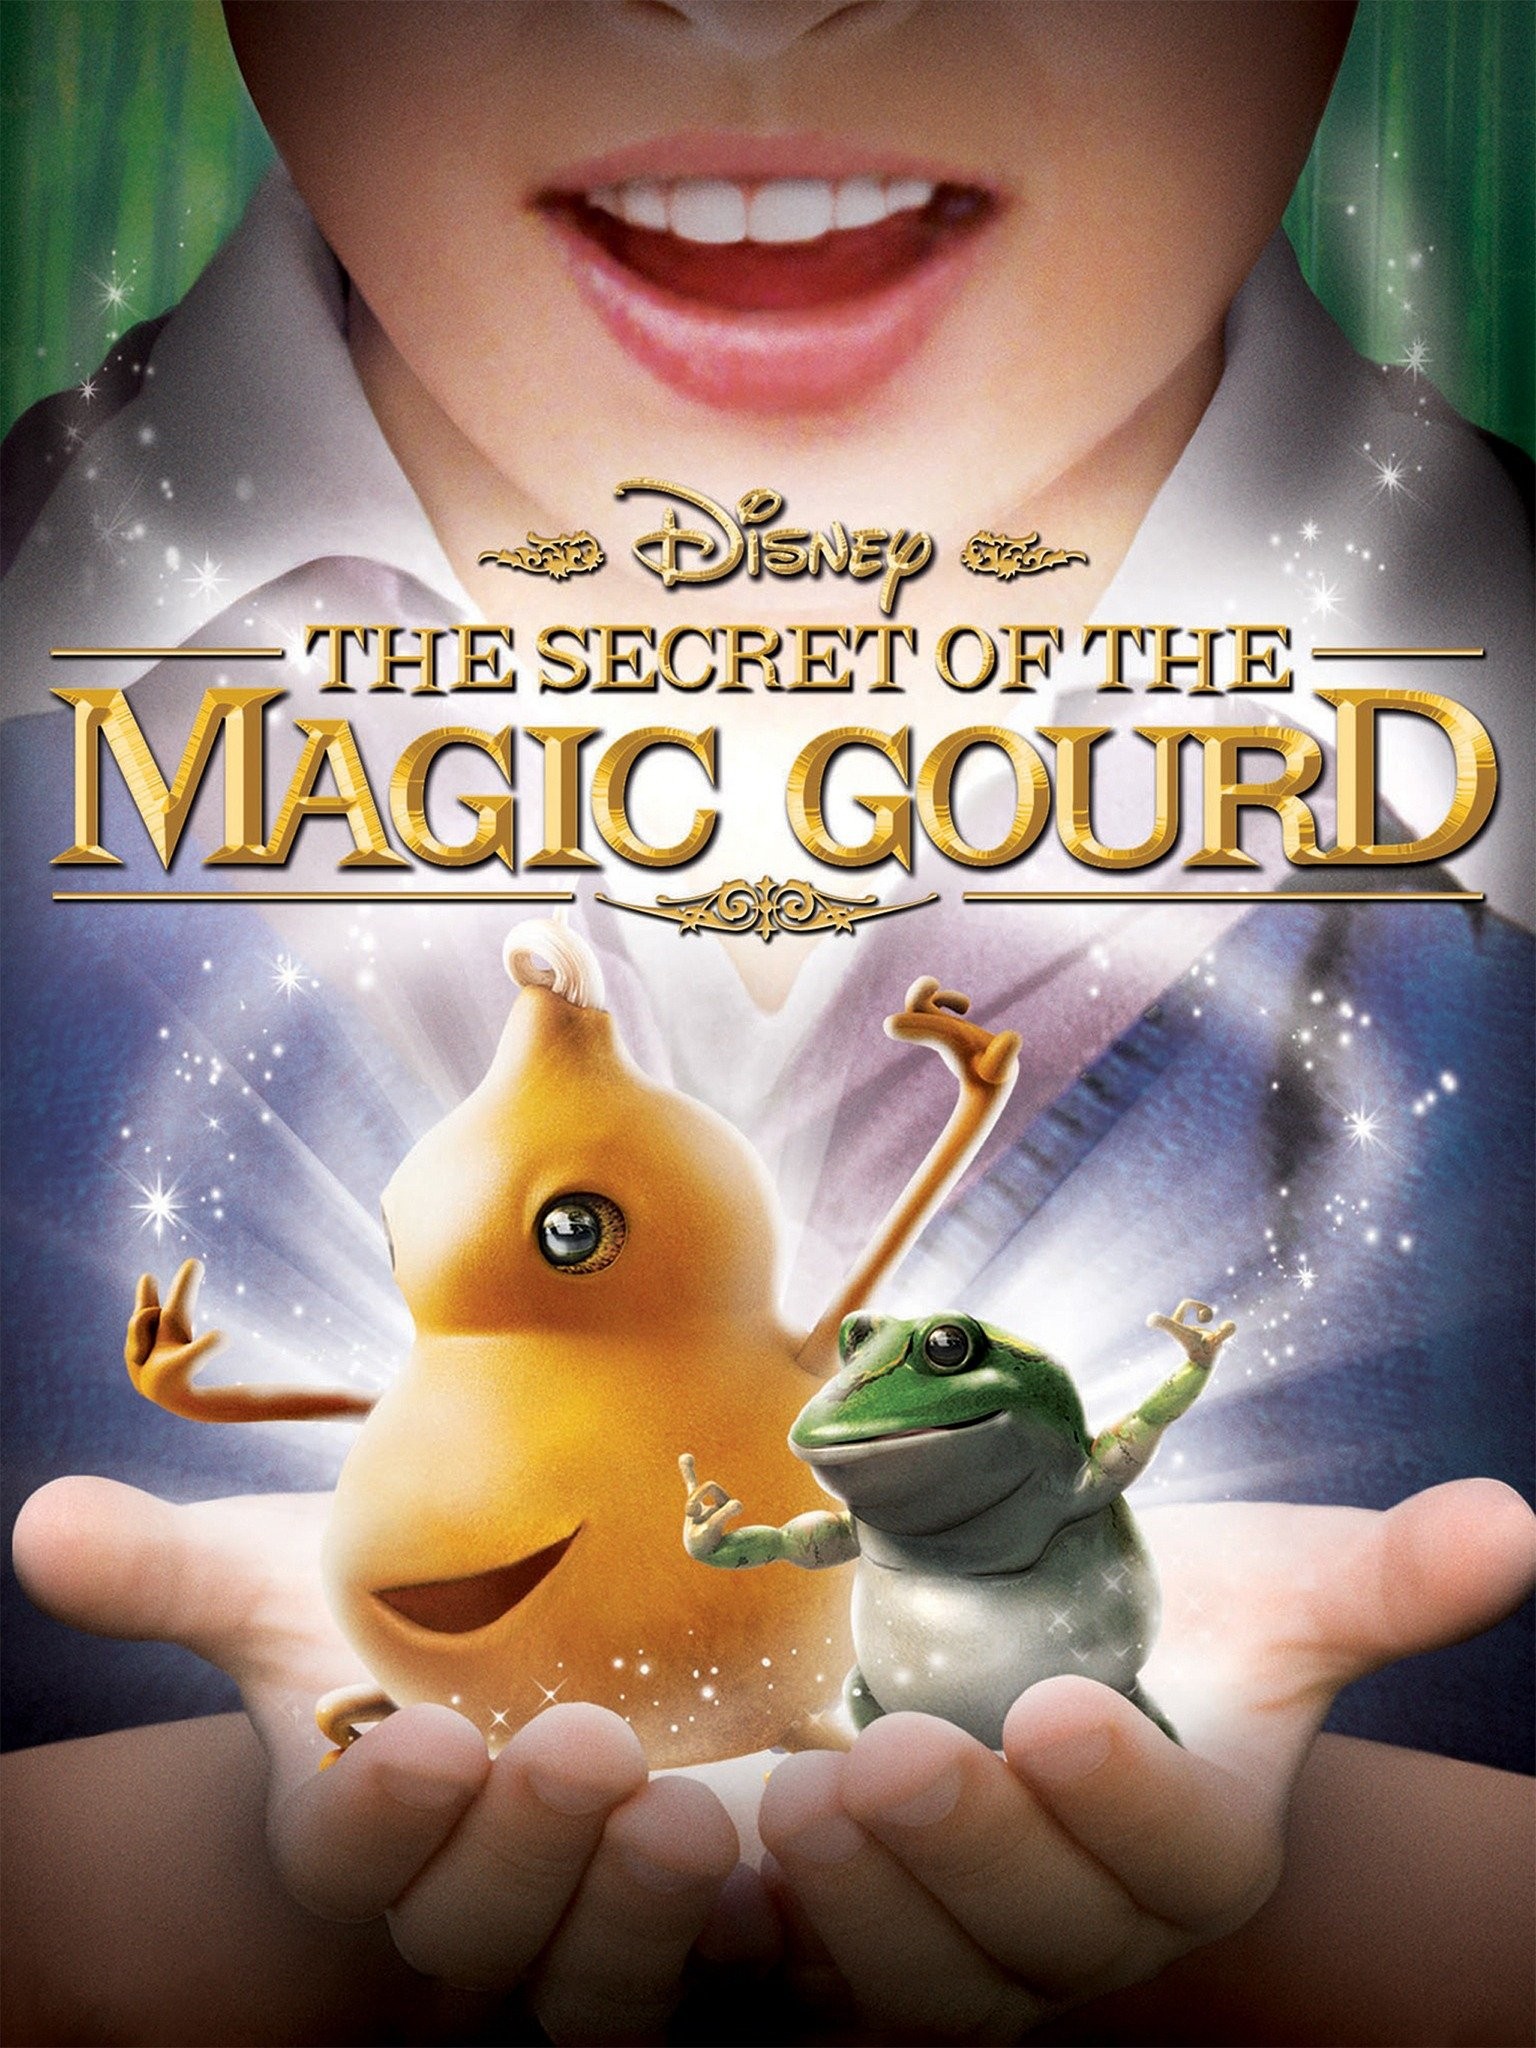  Magi: The Kingdom of Magic DVD Set 1 : Movies & TV